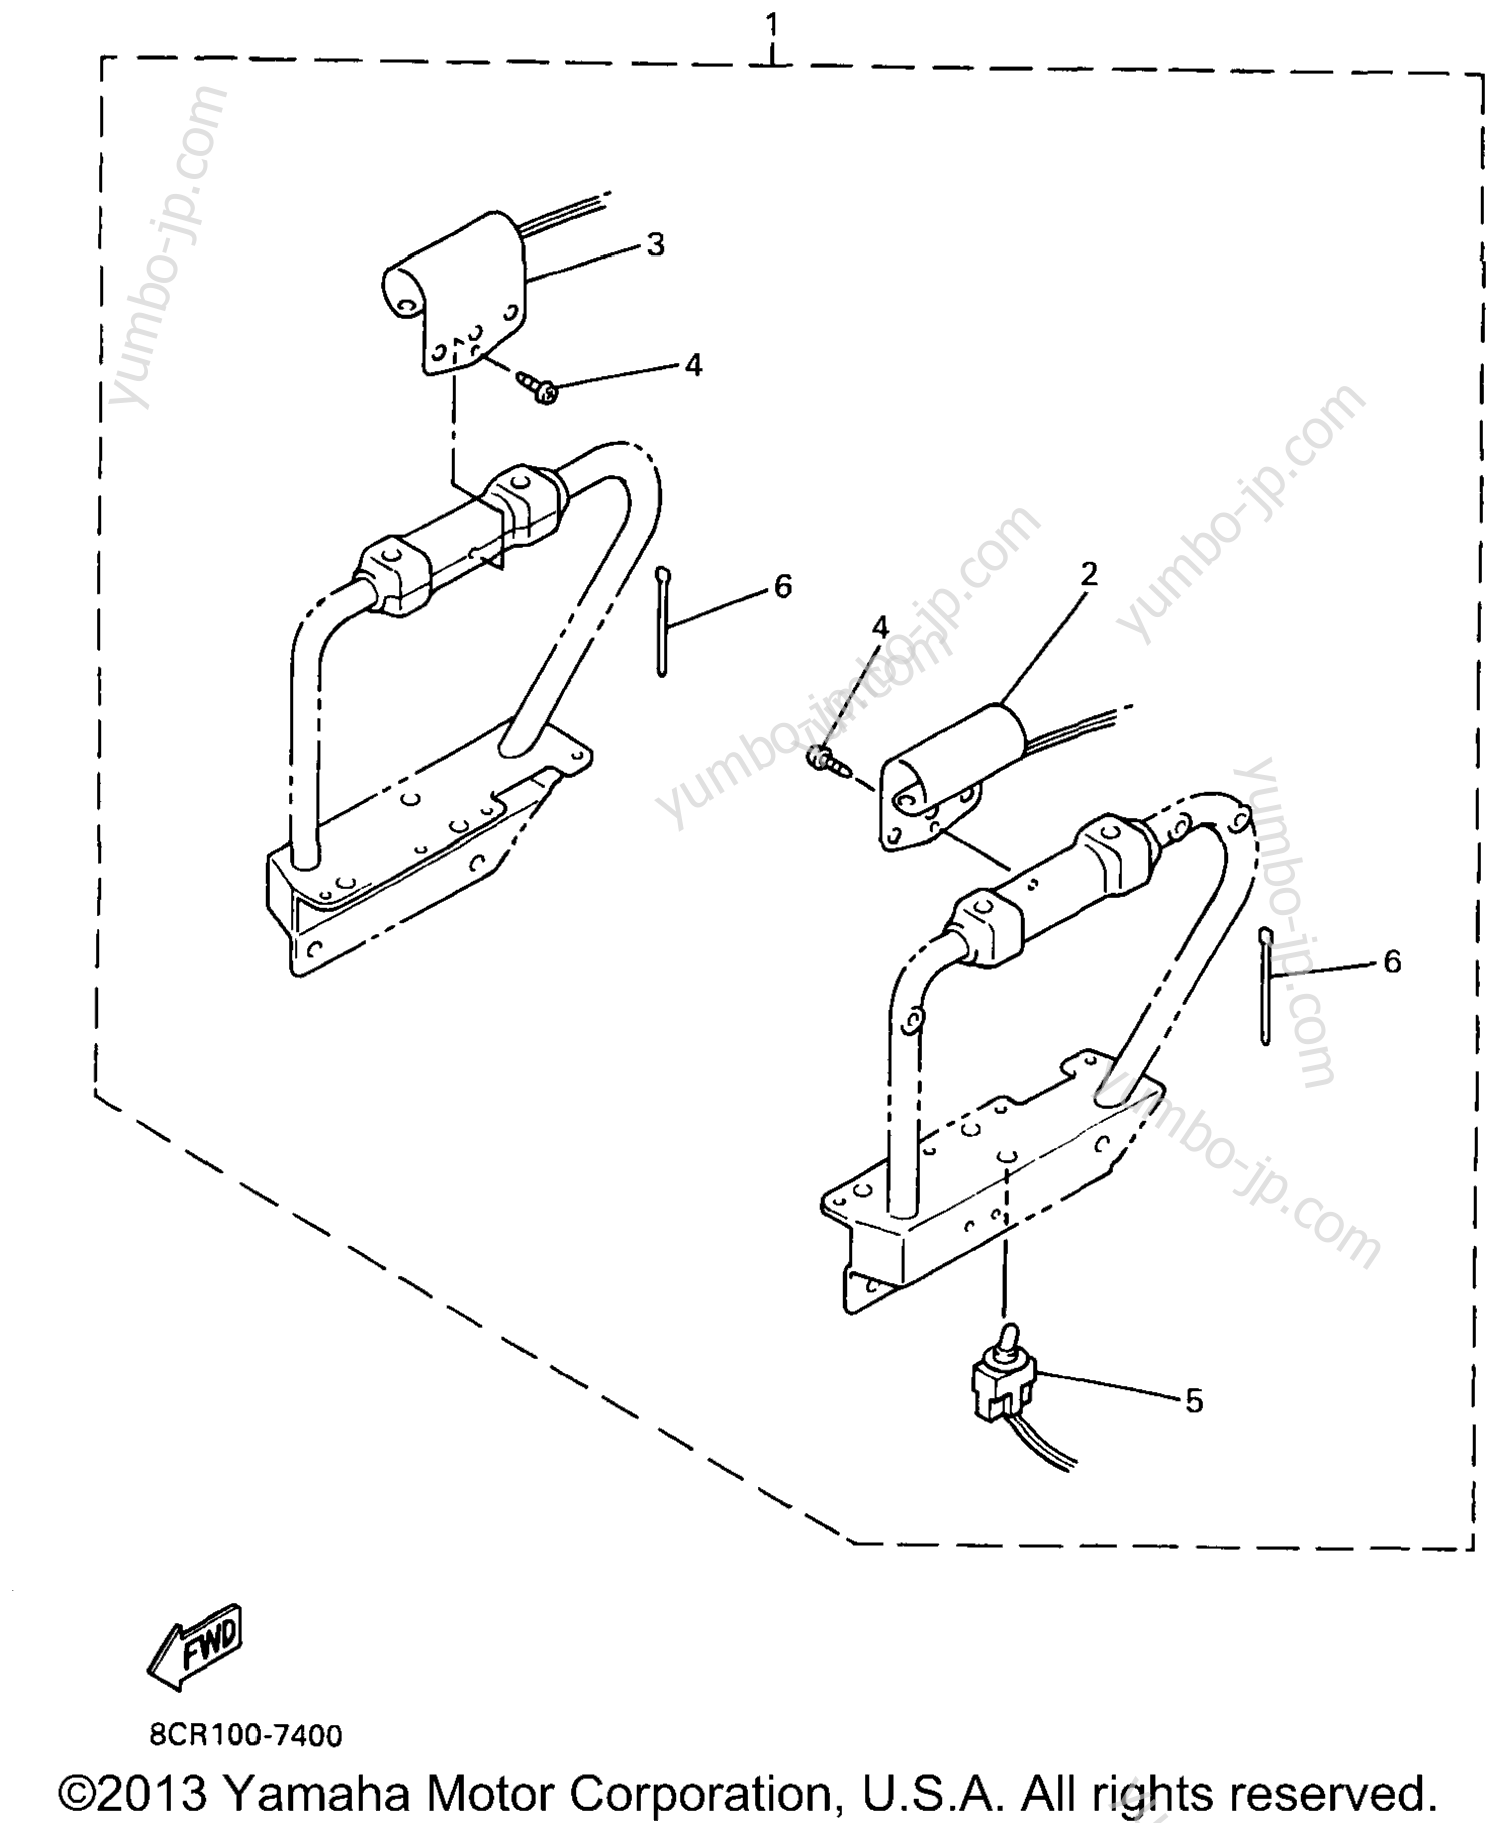 Alternate Grip Warmer Set for snowmobiles YAMAHA VMAX 700 XTCP (PLASTIC SKI, 1.5"TRACK) (VX700XTCPB) 1998 year